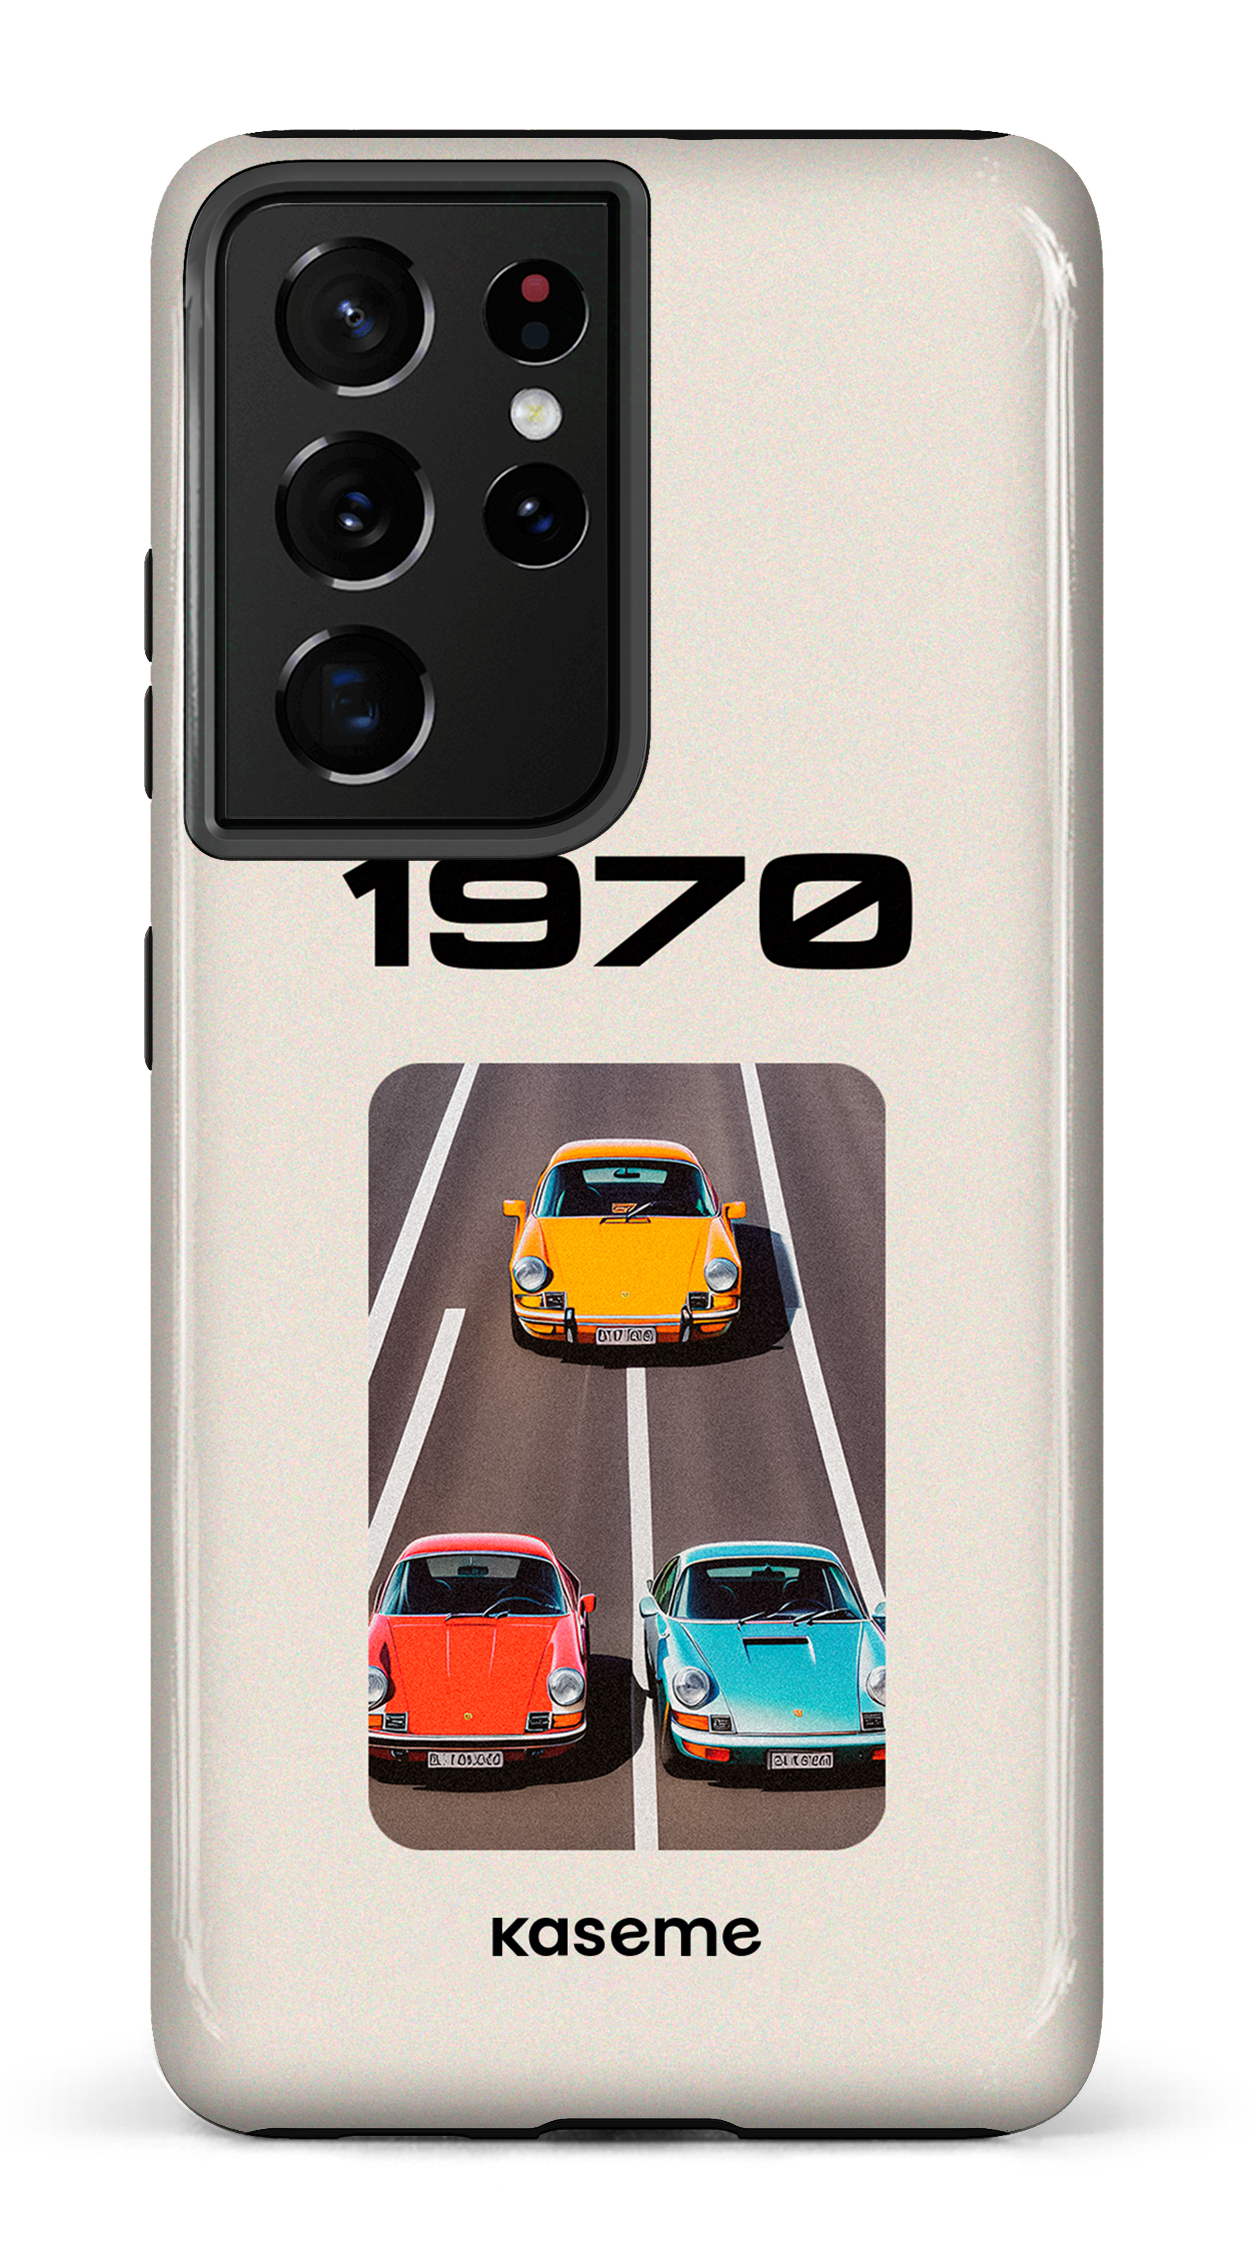 The 1970 - Galaxy S21 Ultra